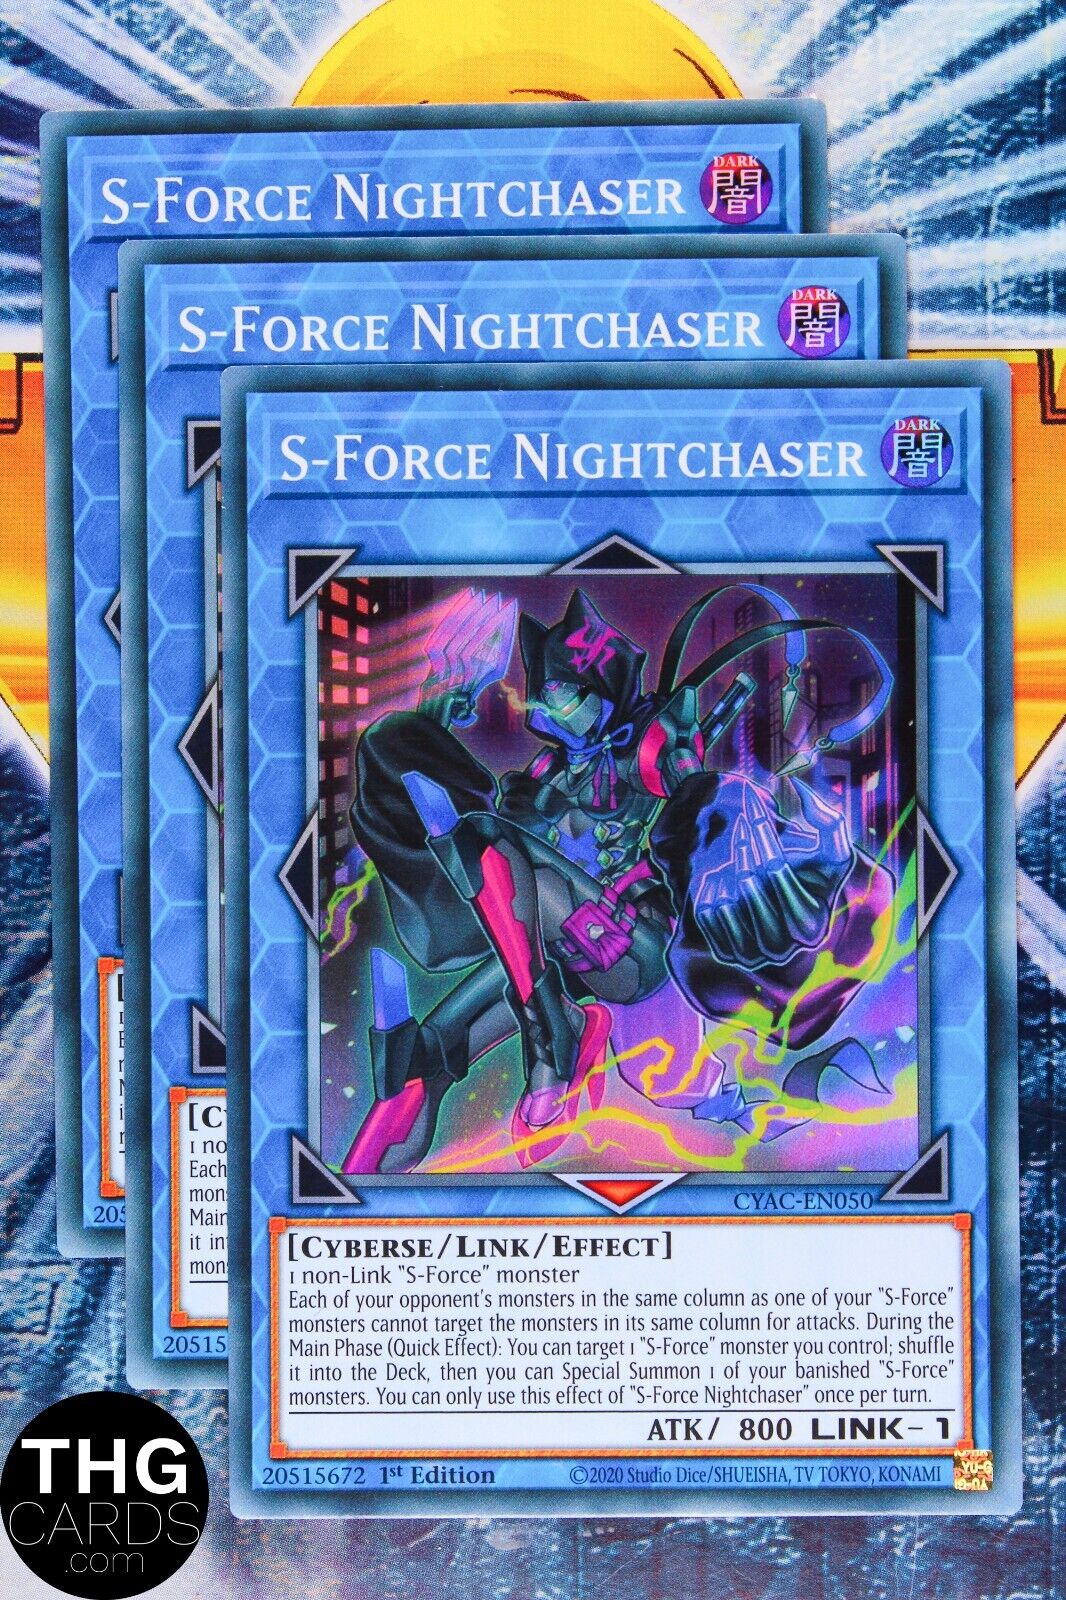 S-Force Nightchaser CYAC-EN050 1st Edition Super Rare Yugioh Card Playset